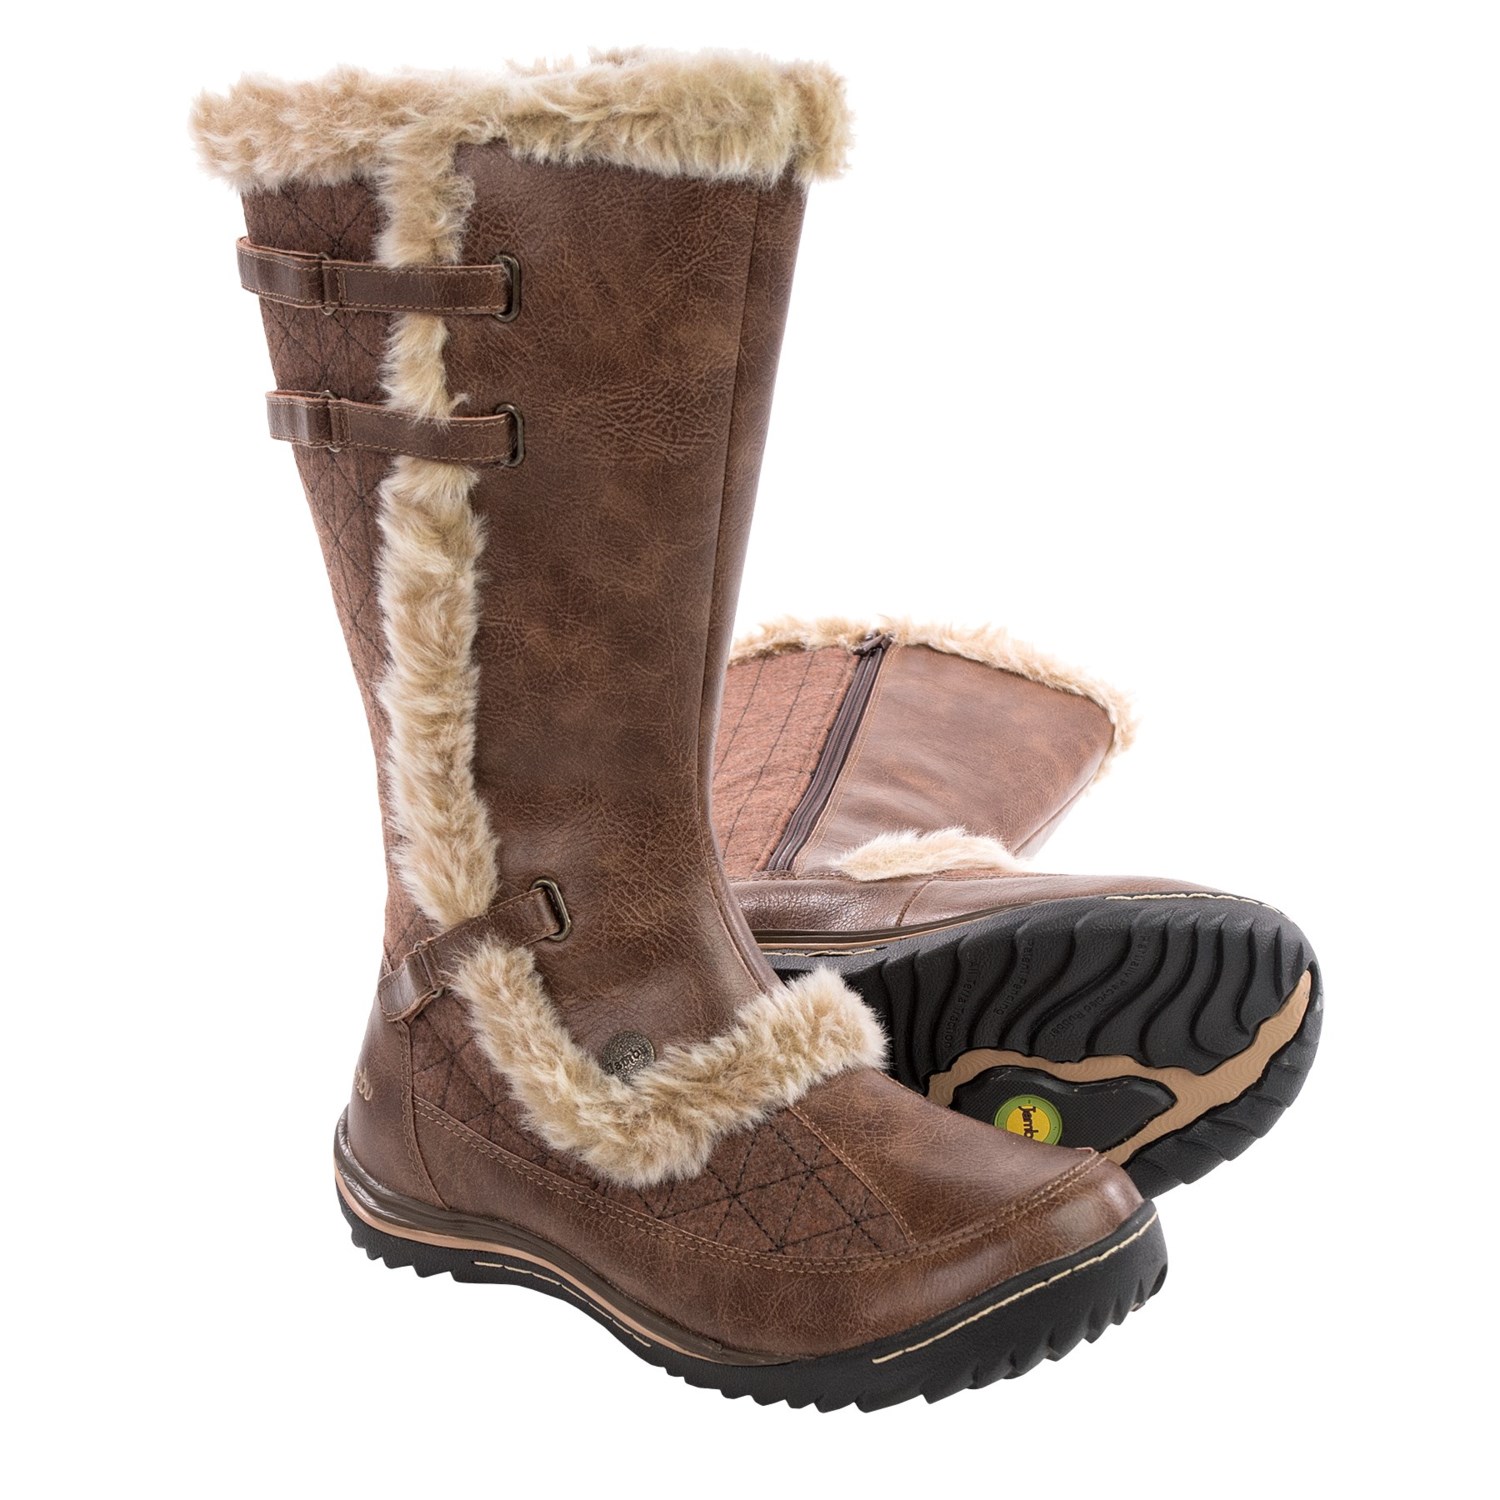 Jambu Arctic Snow Boots – Vegan Leather (For Women)